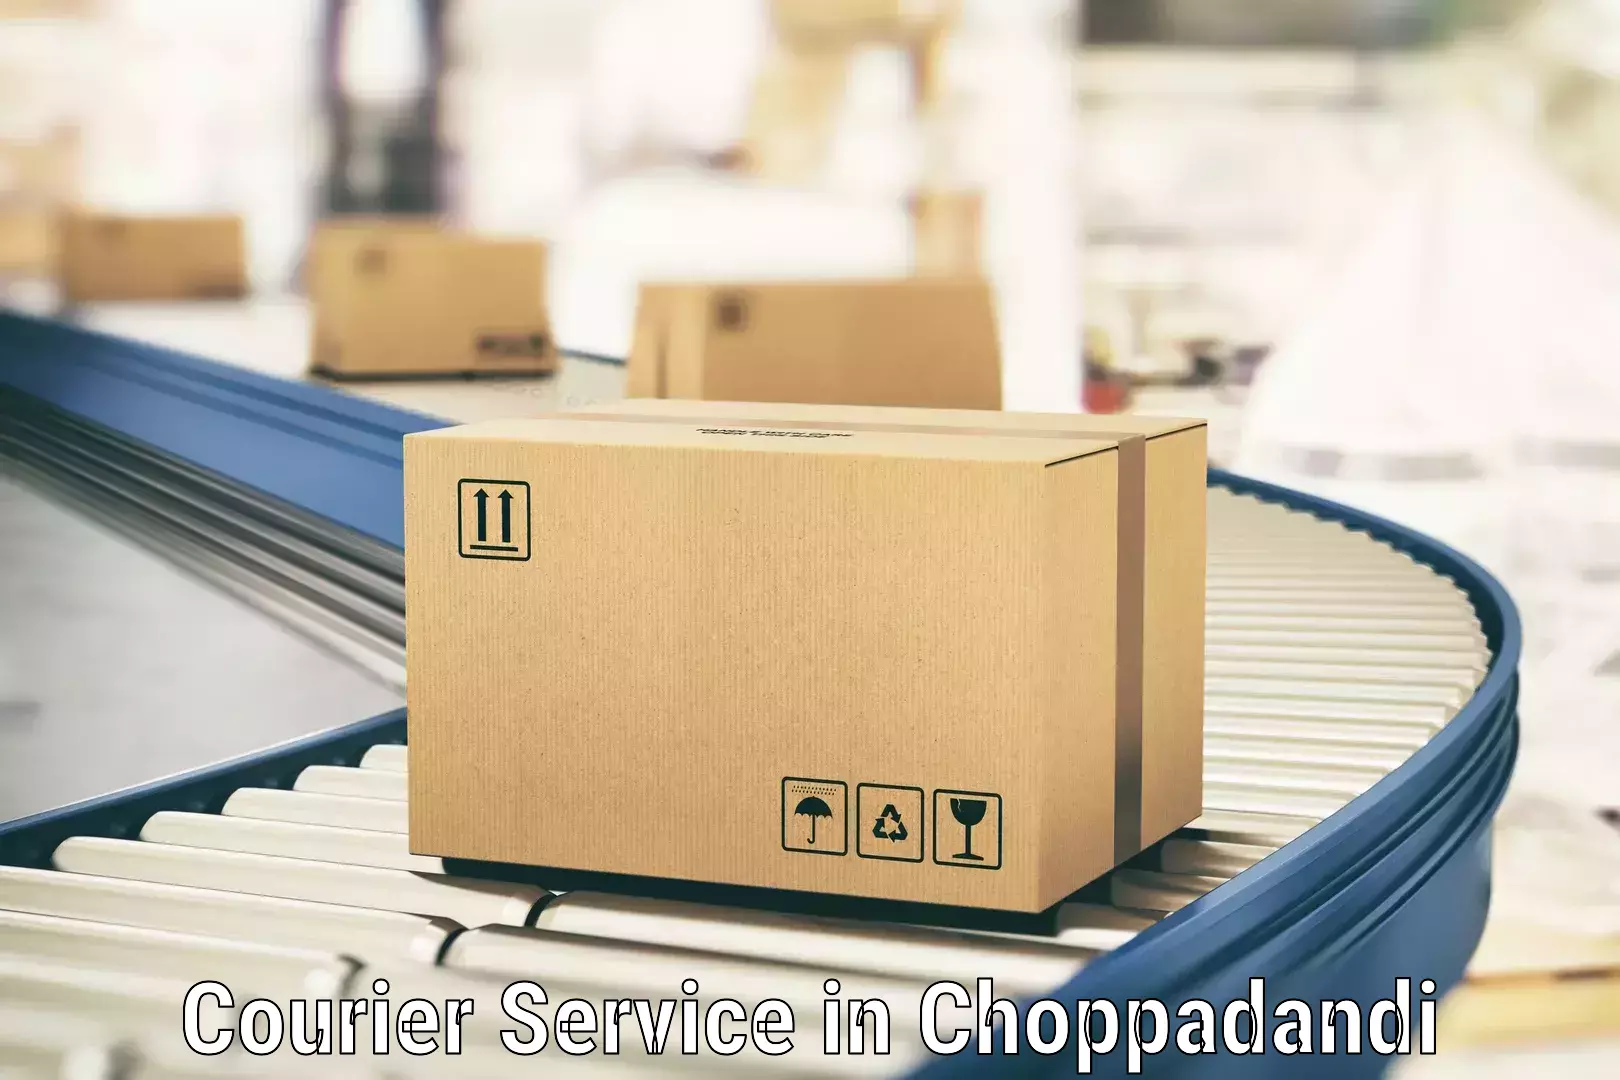 Full-service courier options in Choppadandi